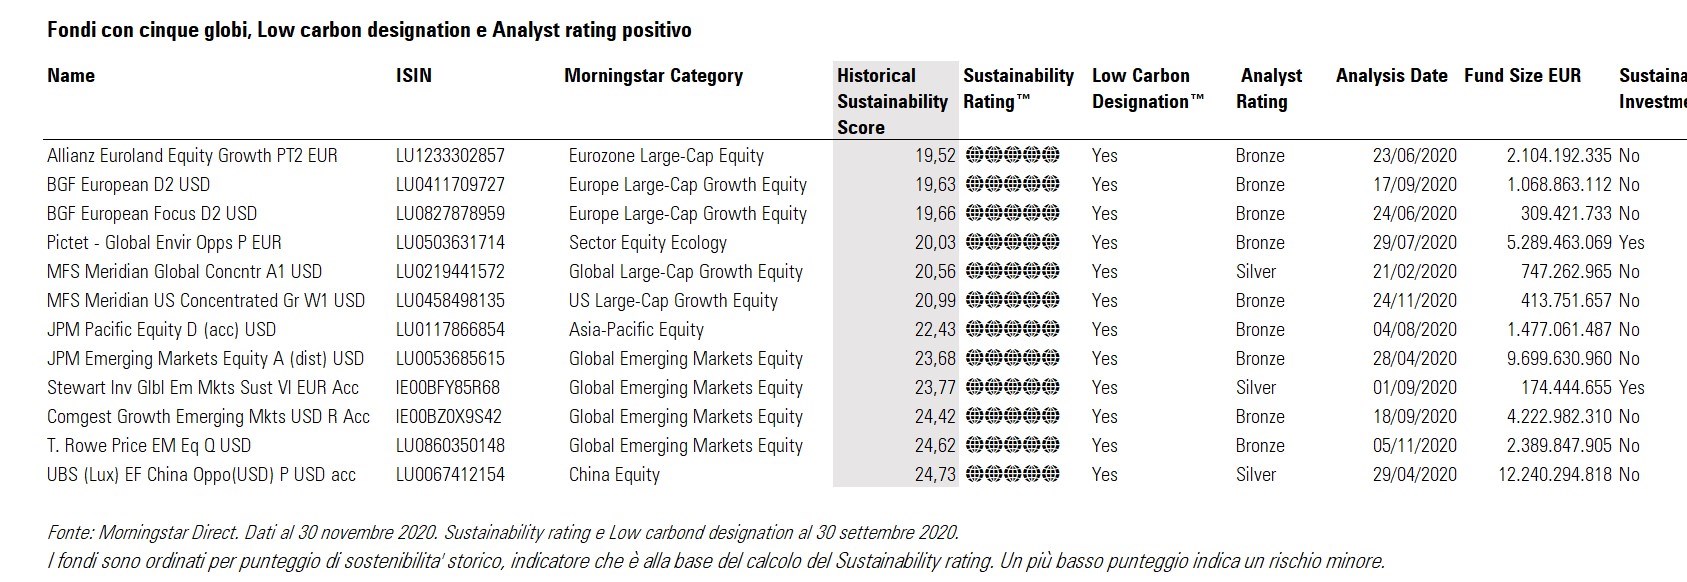 Fondi 5 globi, con Low Carbon Designation e Analyst rating positivo